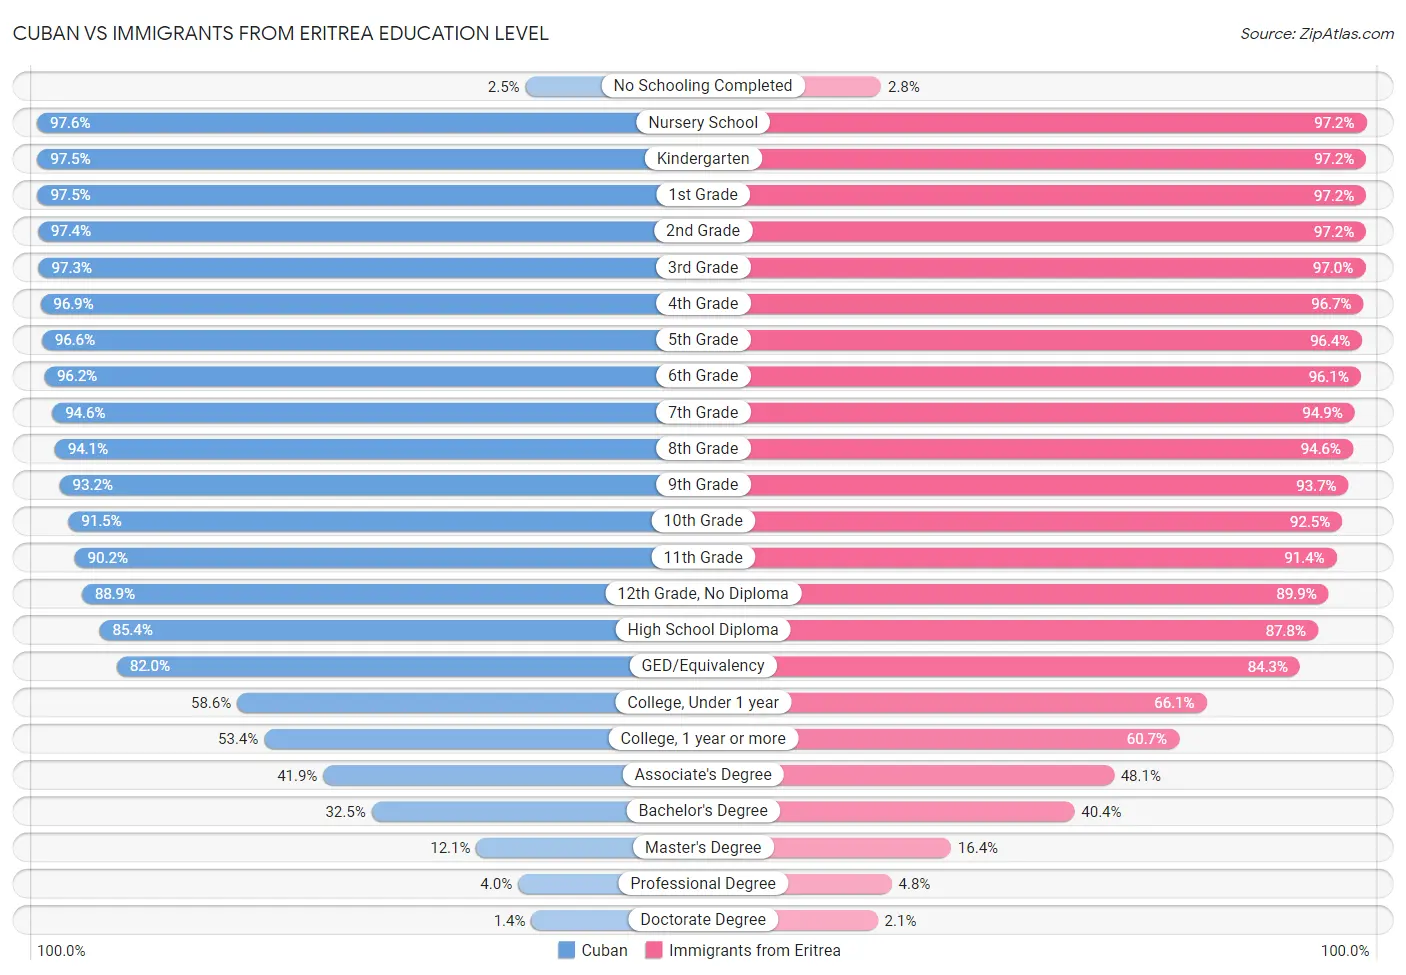 Cuban vs Immigrants from Eritrea Education Level